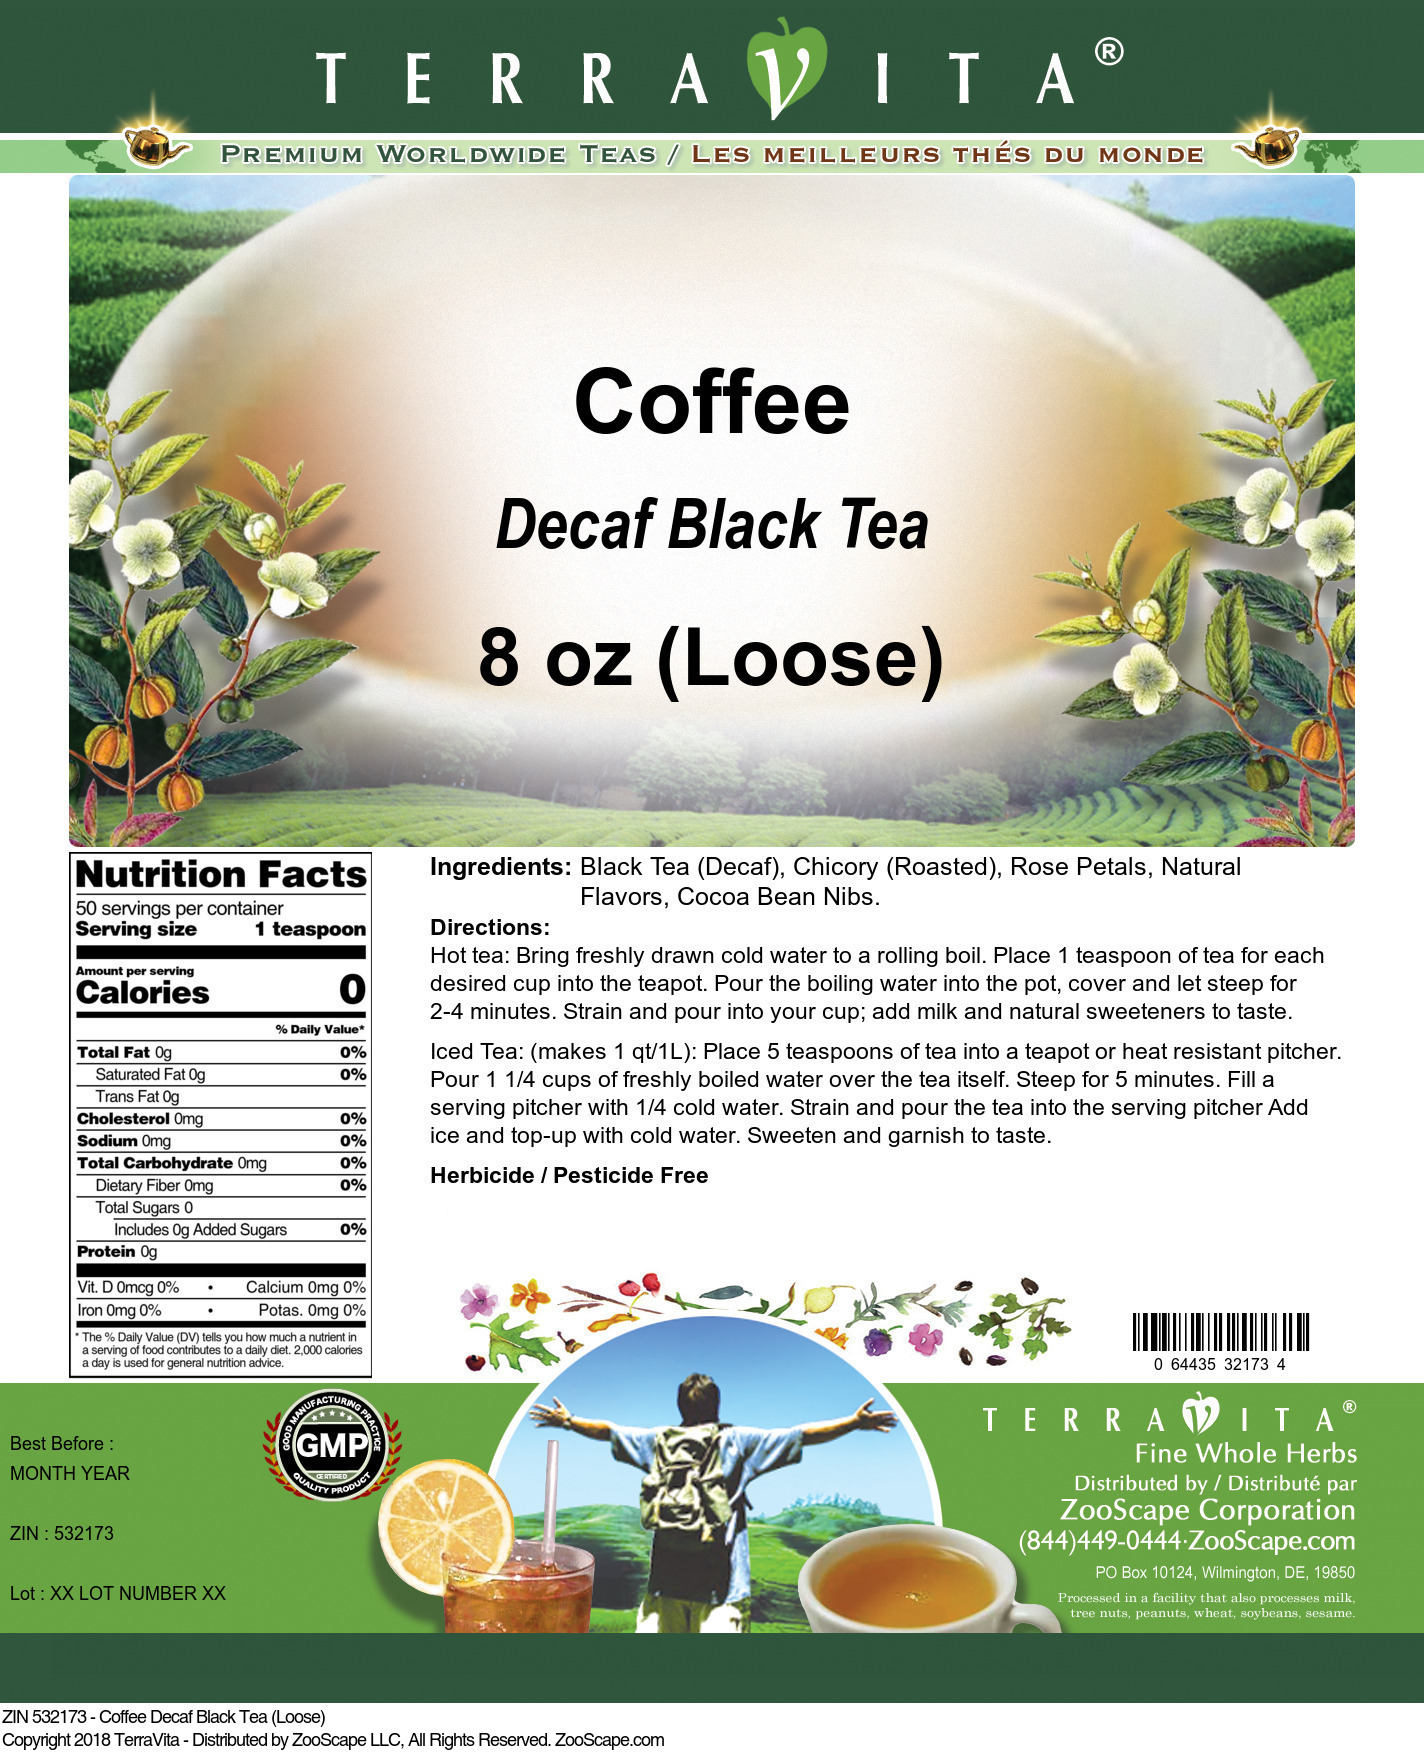 Coffee Decaf Black Tea (Loose) - Label